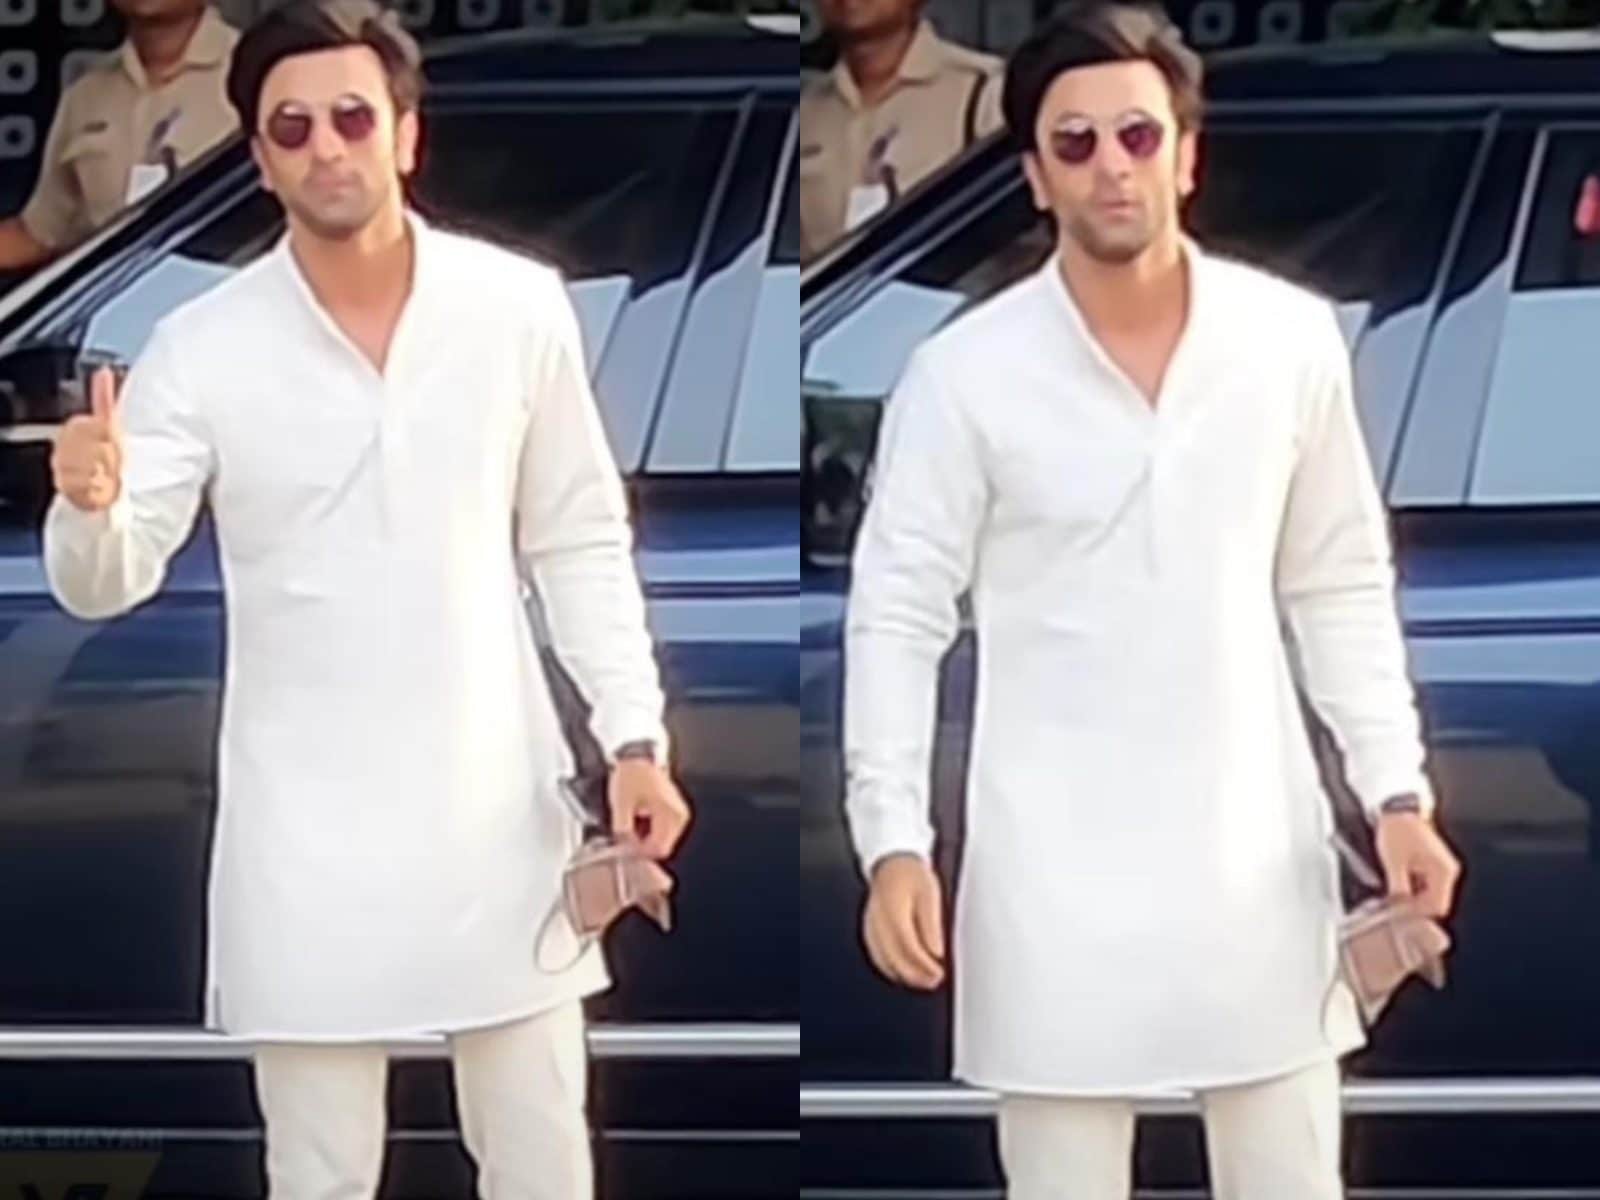 Ranbir Kapoor Makes Style Statement in White Kurta, Fan Says 'Only